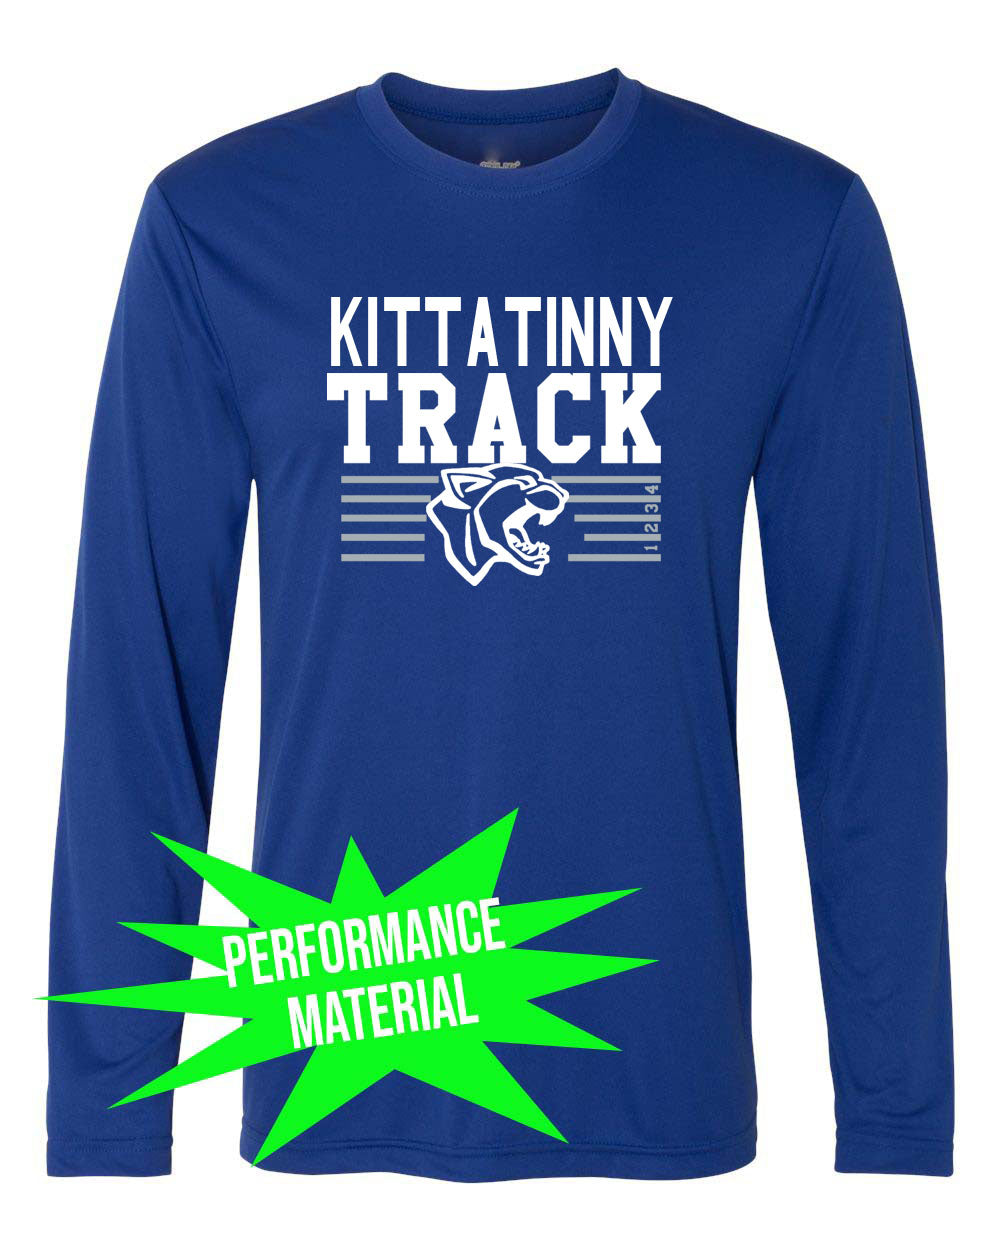 Kittatinny Track Performance Material Design 5 Long Sleeve Shirt